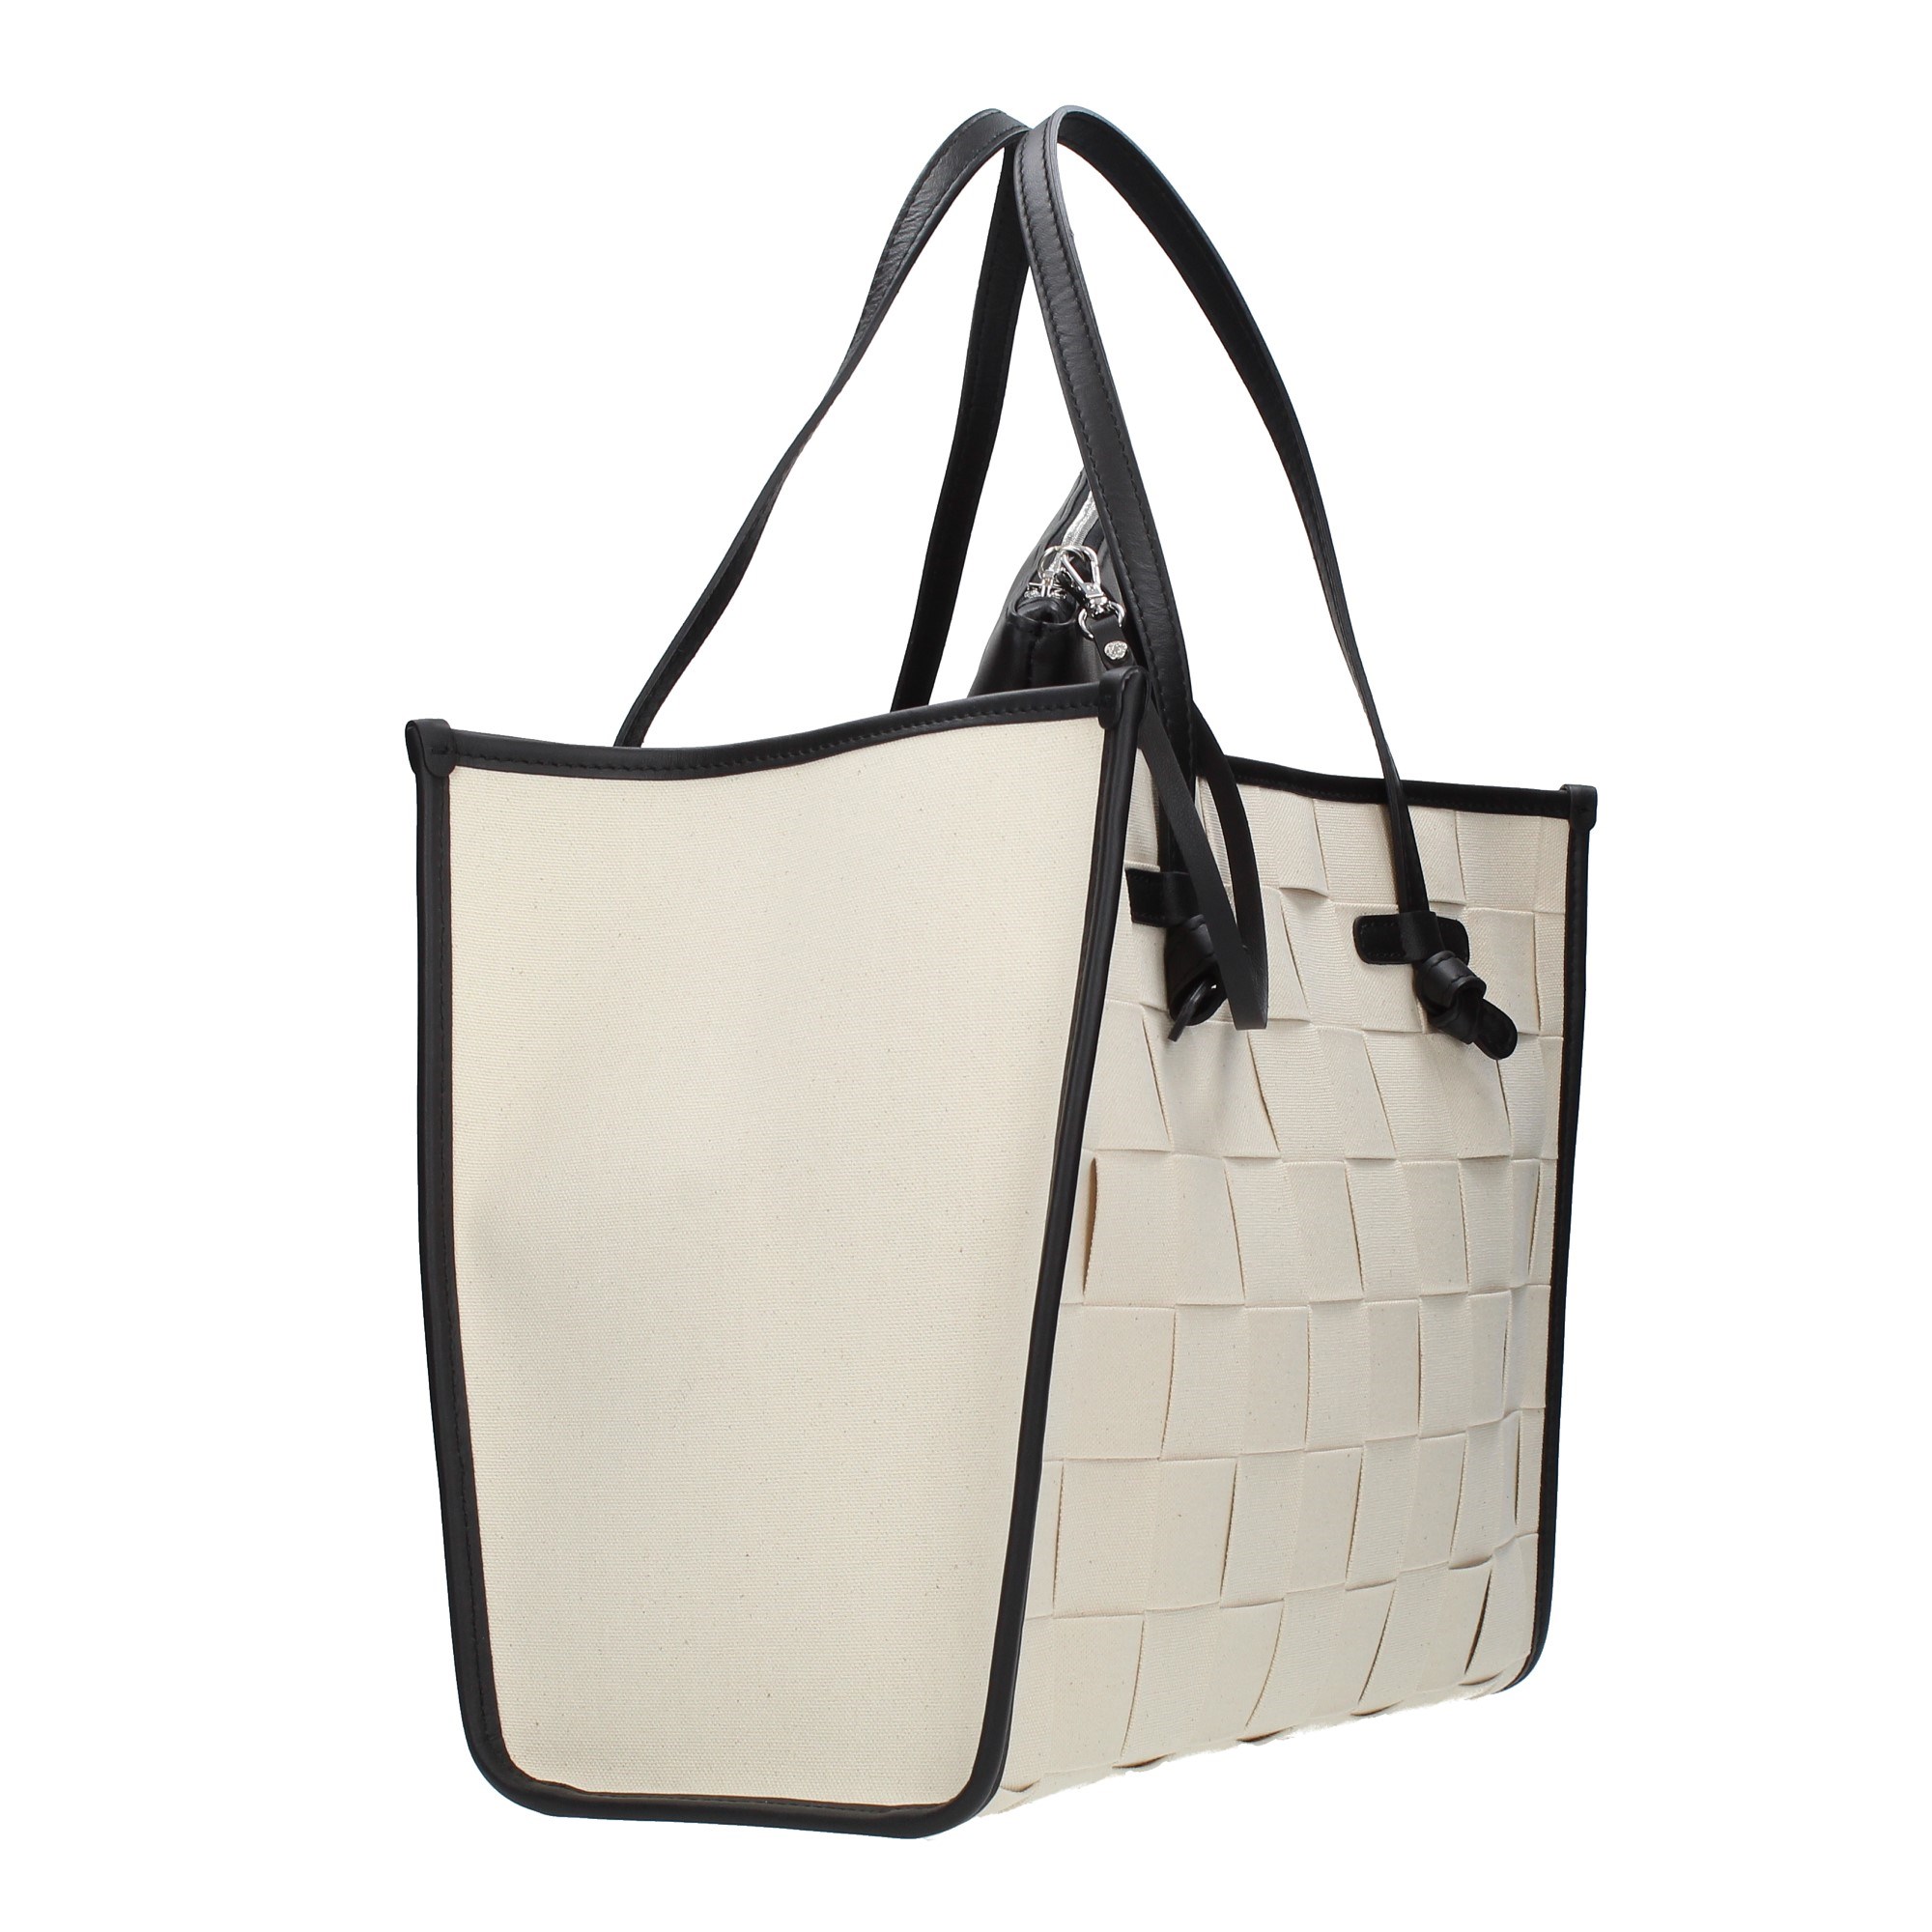 Marcella Club Gianni Chiarini Accessories Women Shoulder Bags White BS8370 INT-CNV